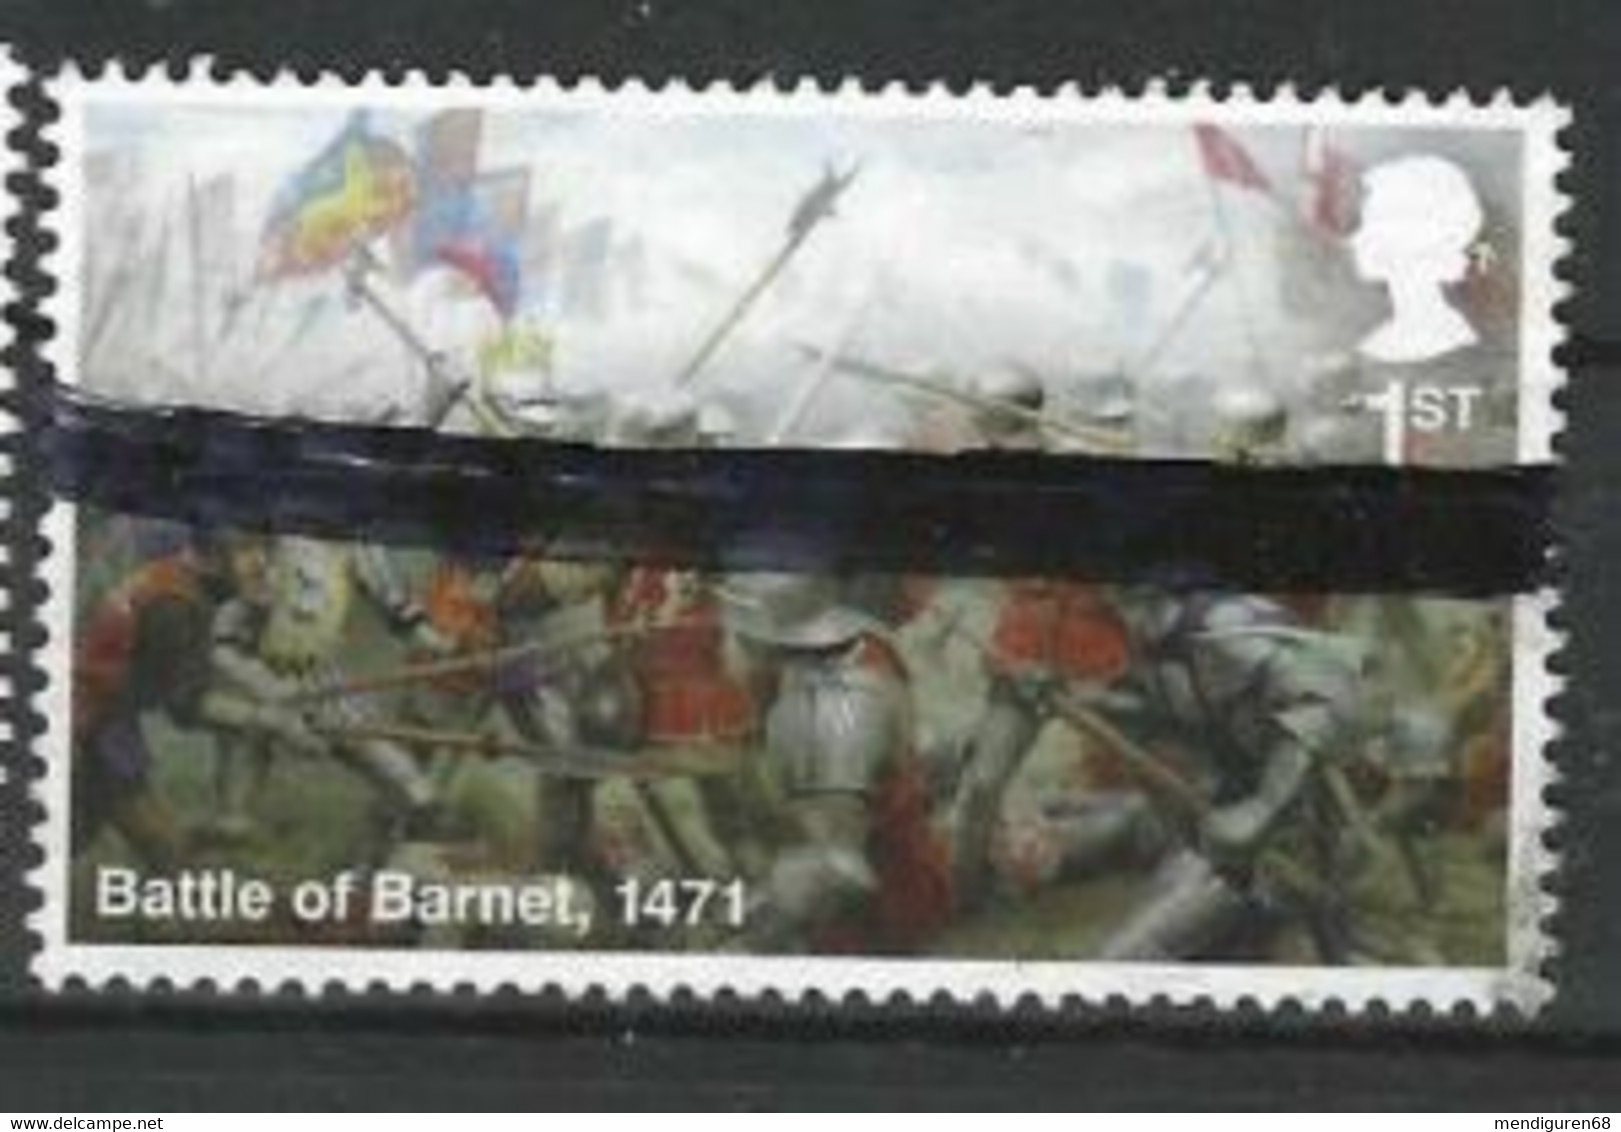 GROSSBRITANNIEN GRANDE BRETAGNE GB 2021 THE WARS OF THE ROSES: Battle Of BARNE 1471 USED SG 451 MI 4761 YT 5175 SC 4101 - Gebruikt